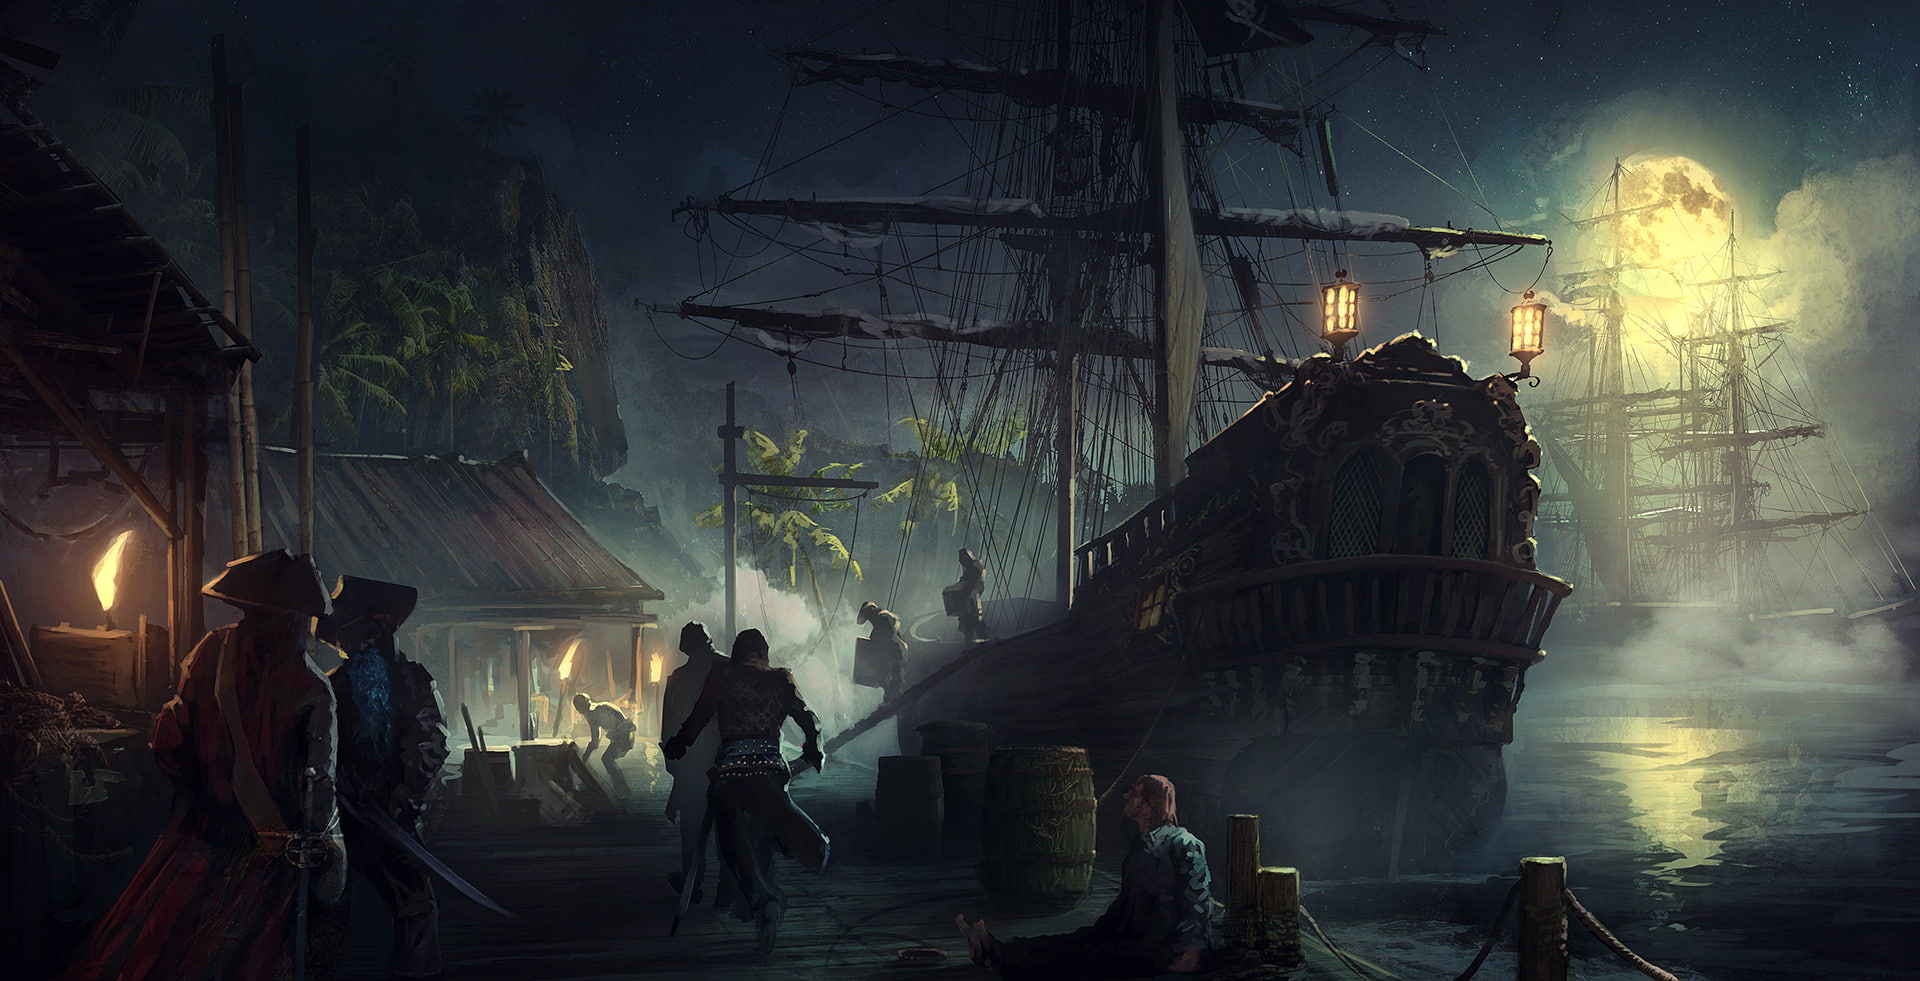 digital art, Dock, fantasy Art, Moon, night, pirates, Sailing Ship